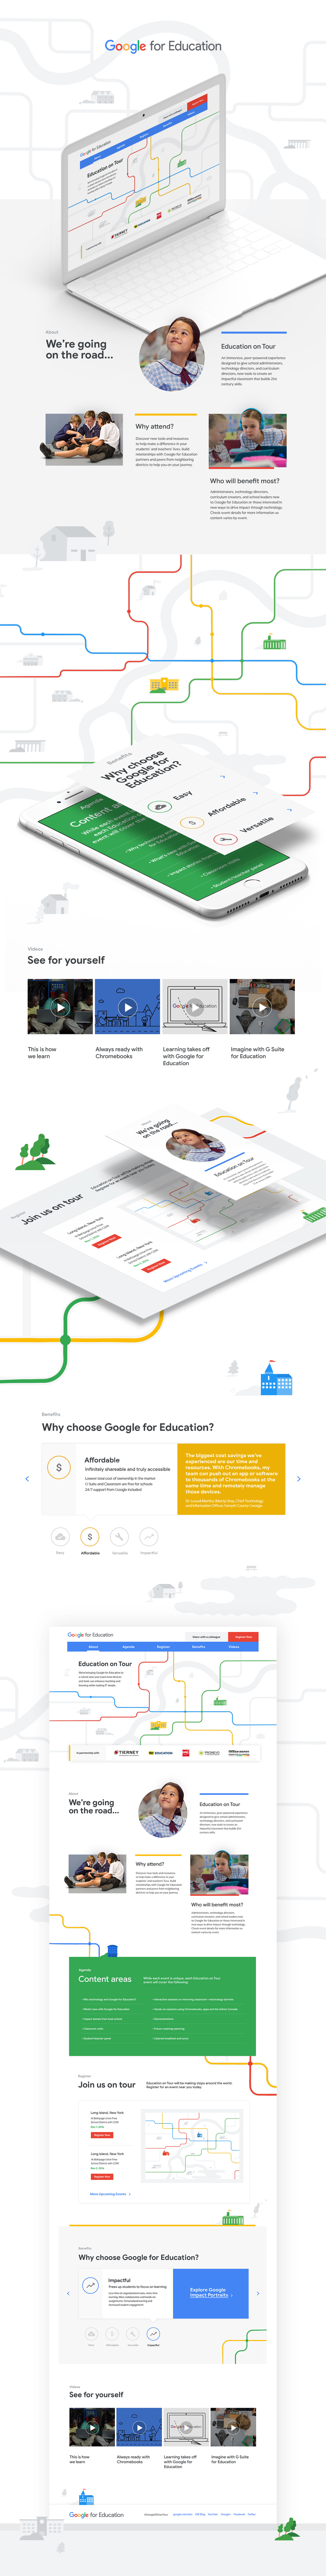 Google for Education